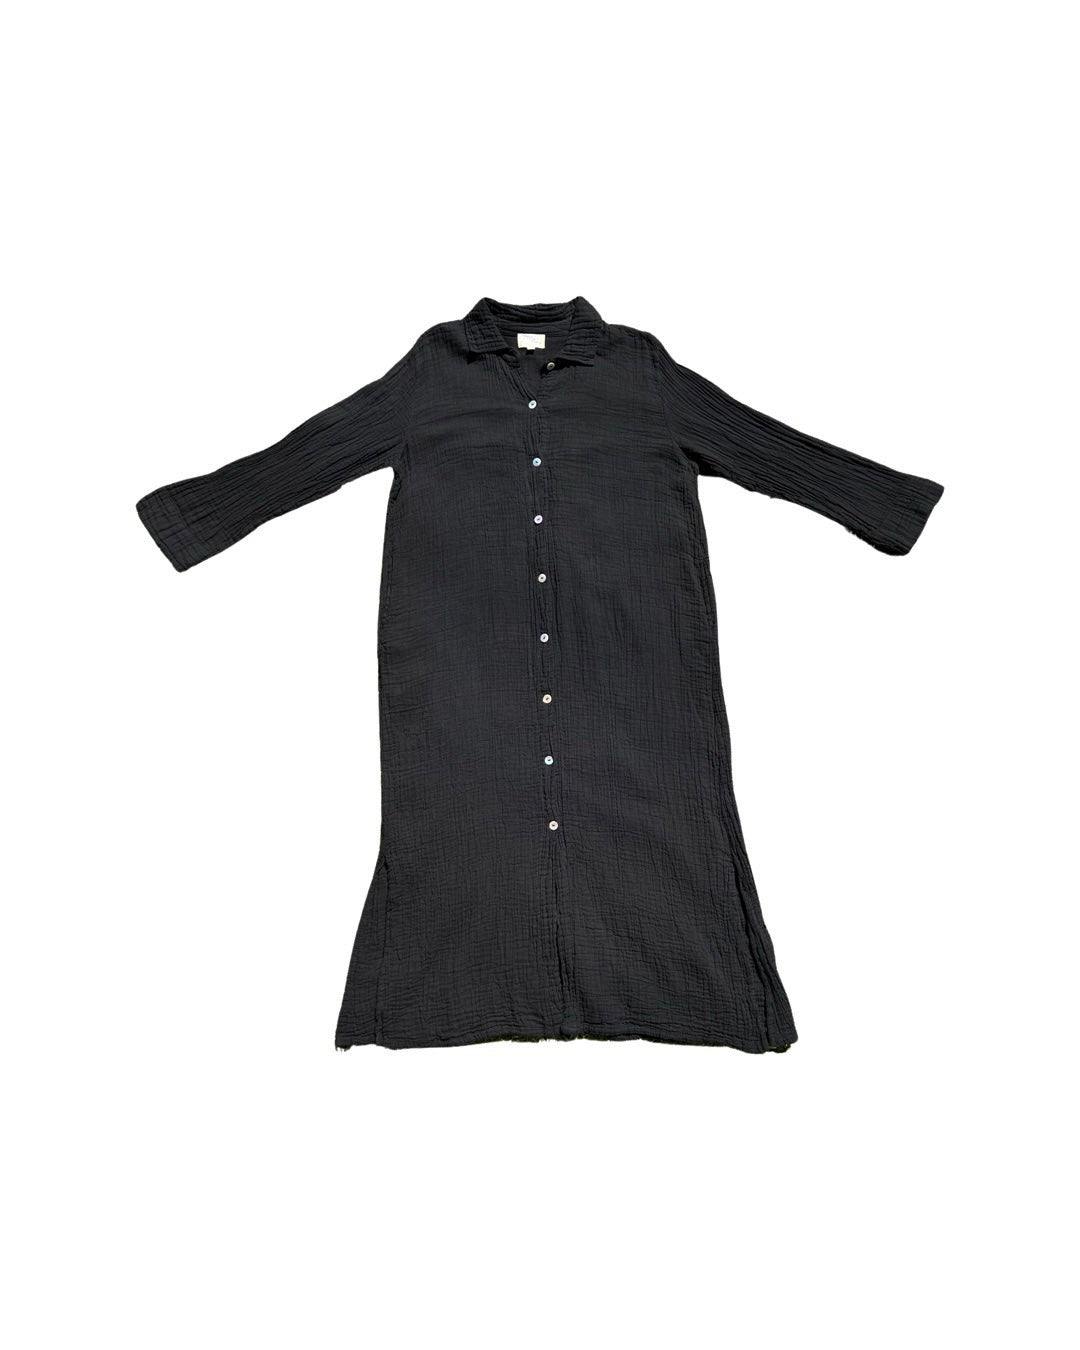 BLACK SHELL SHIRT DRESS - Kingfisher Road - Online Boutique